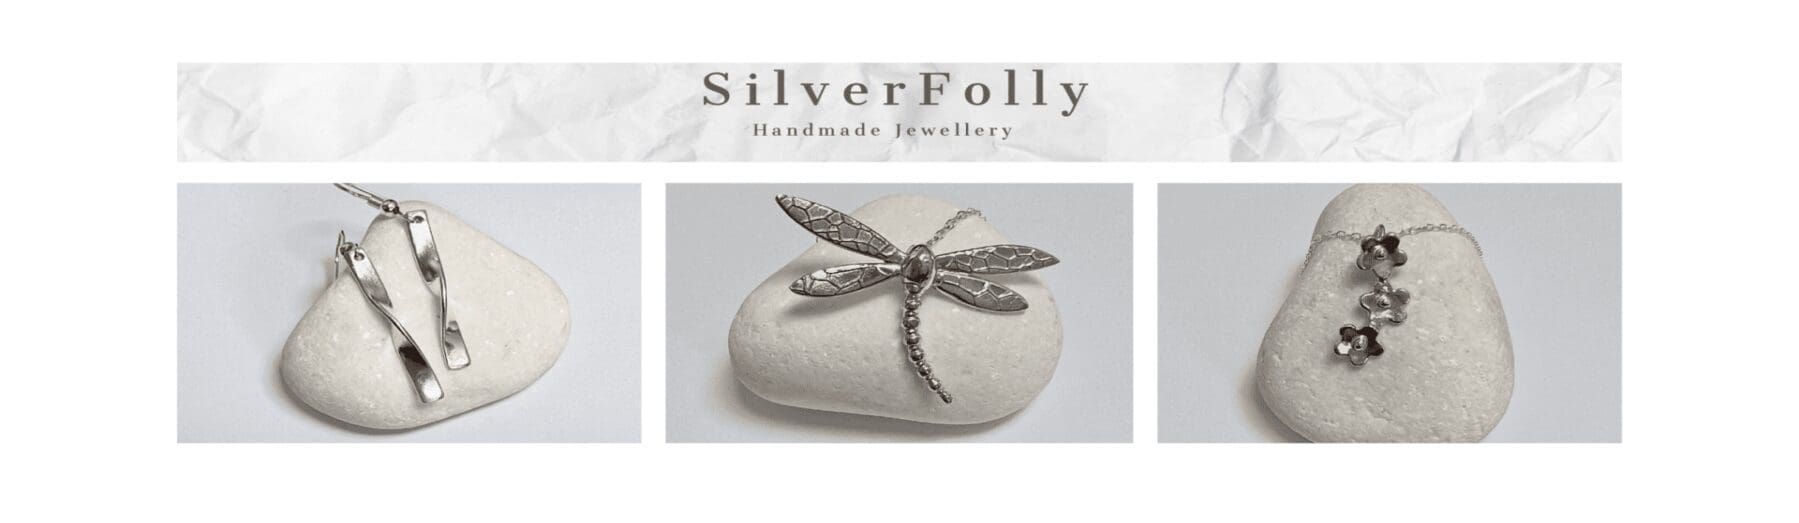 SilverFolly